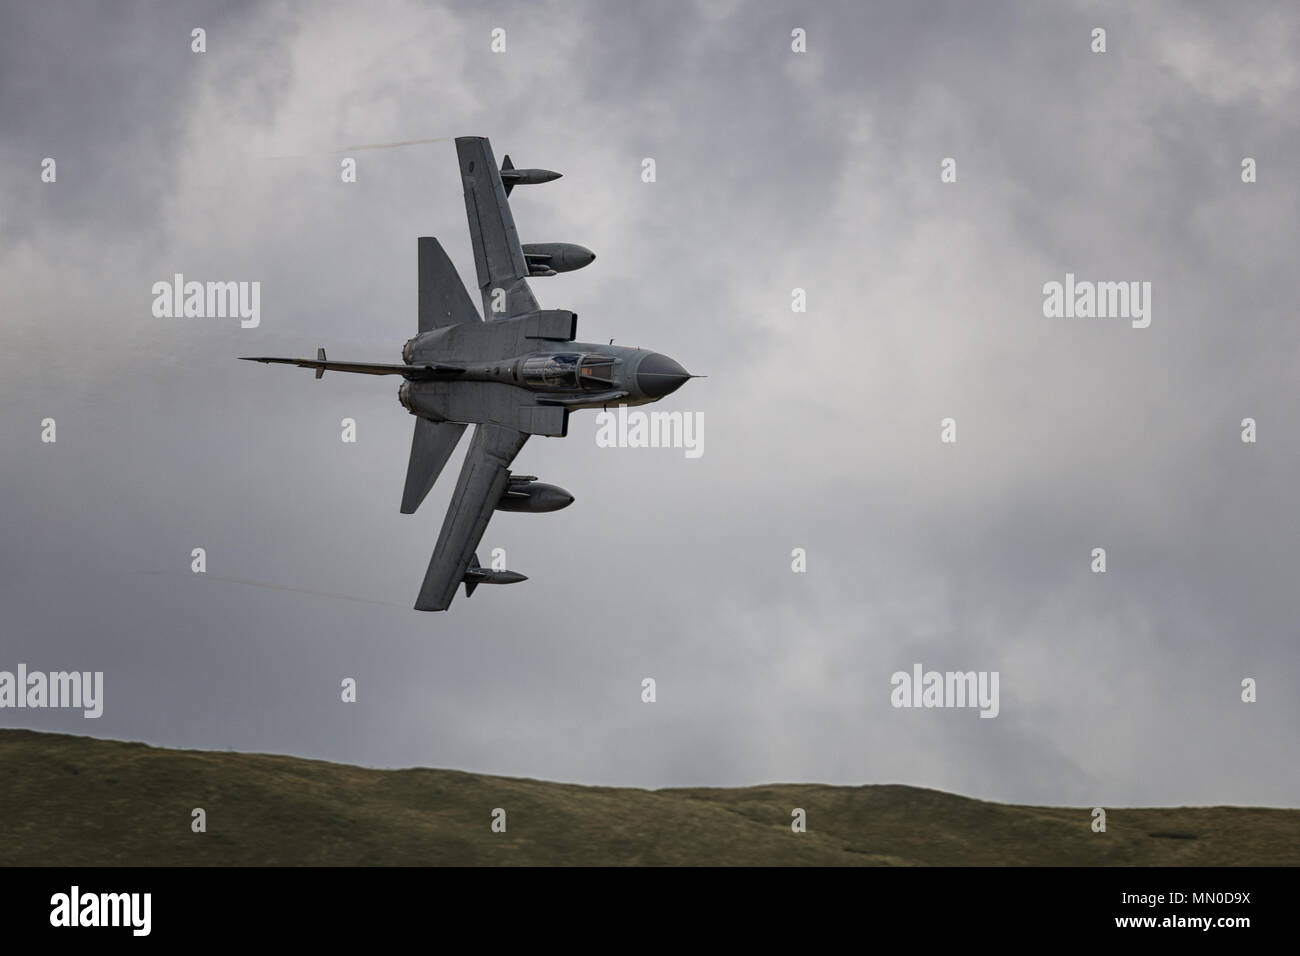 Royal air force Panavia Tornado captured in the Mach loop in Wales Stock Photo